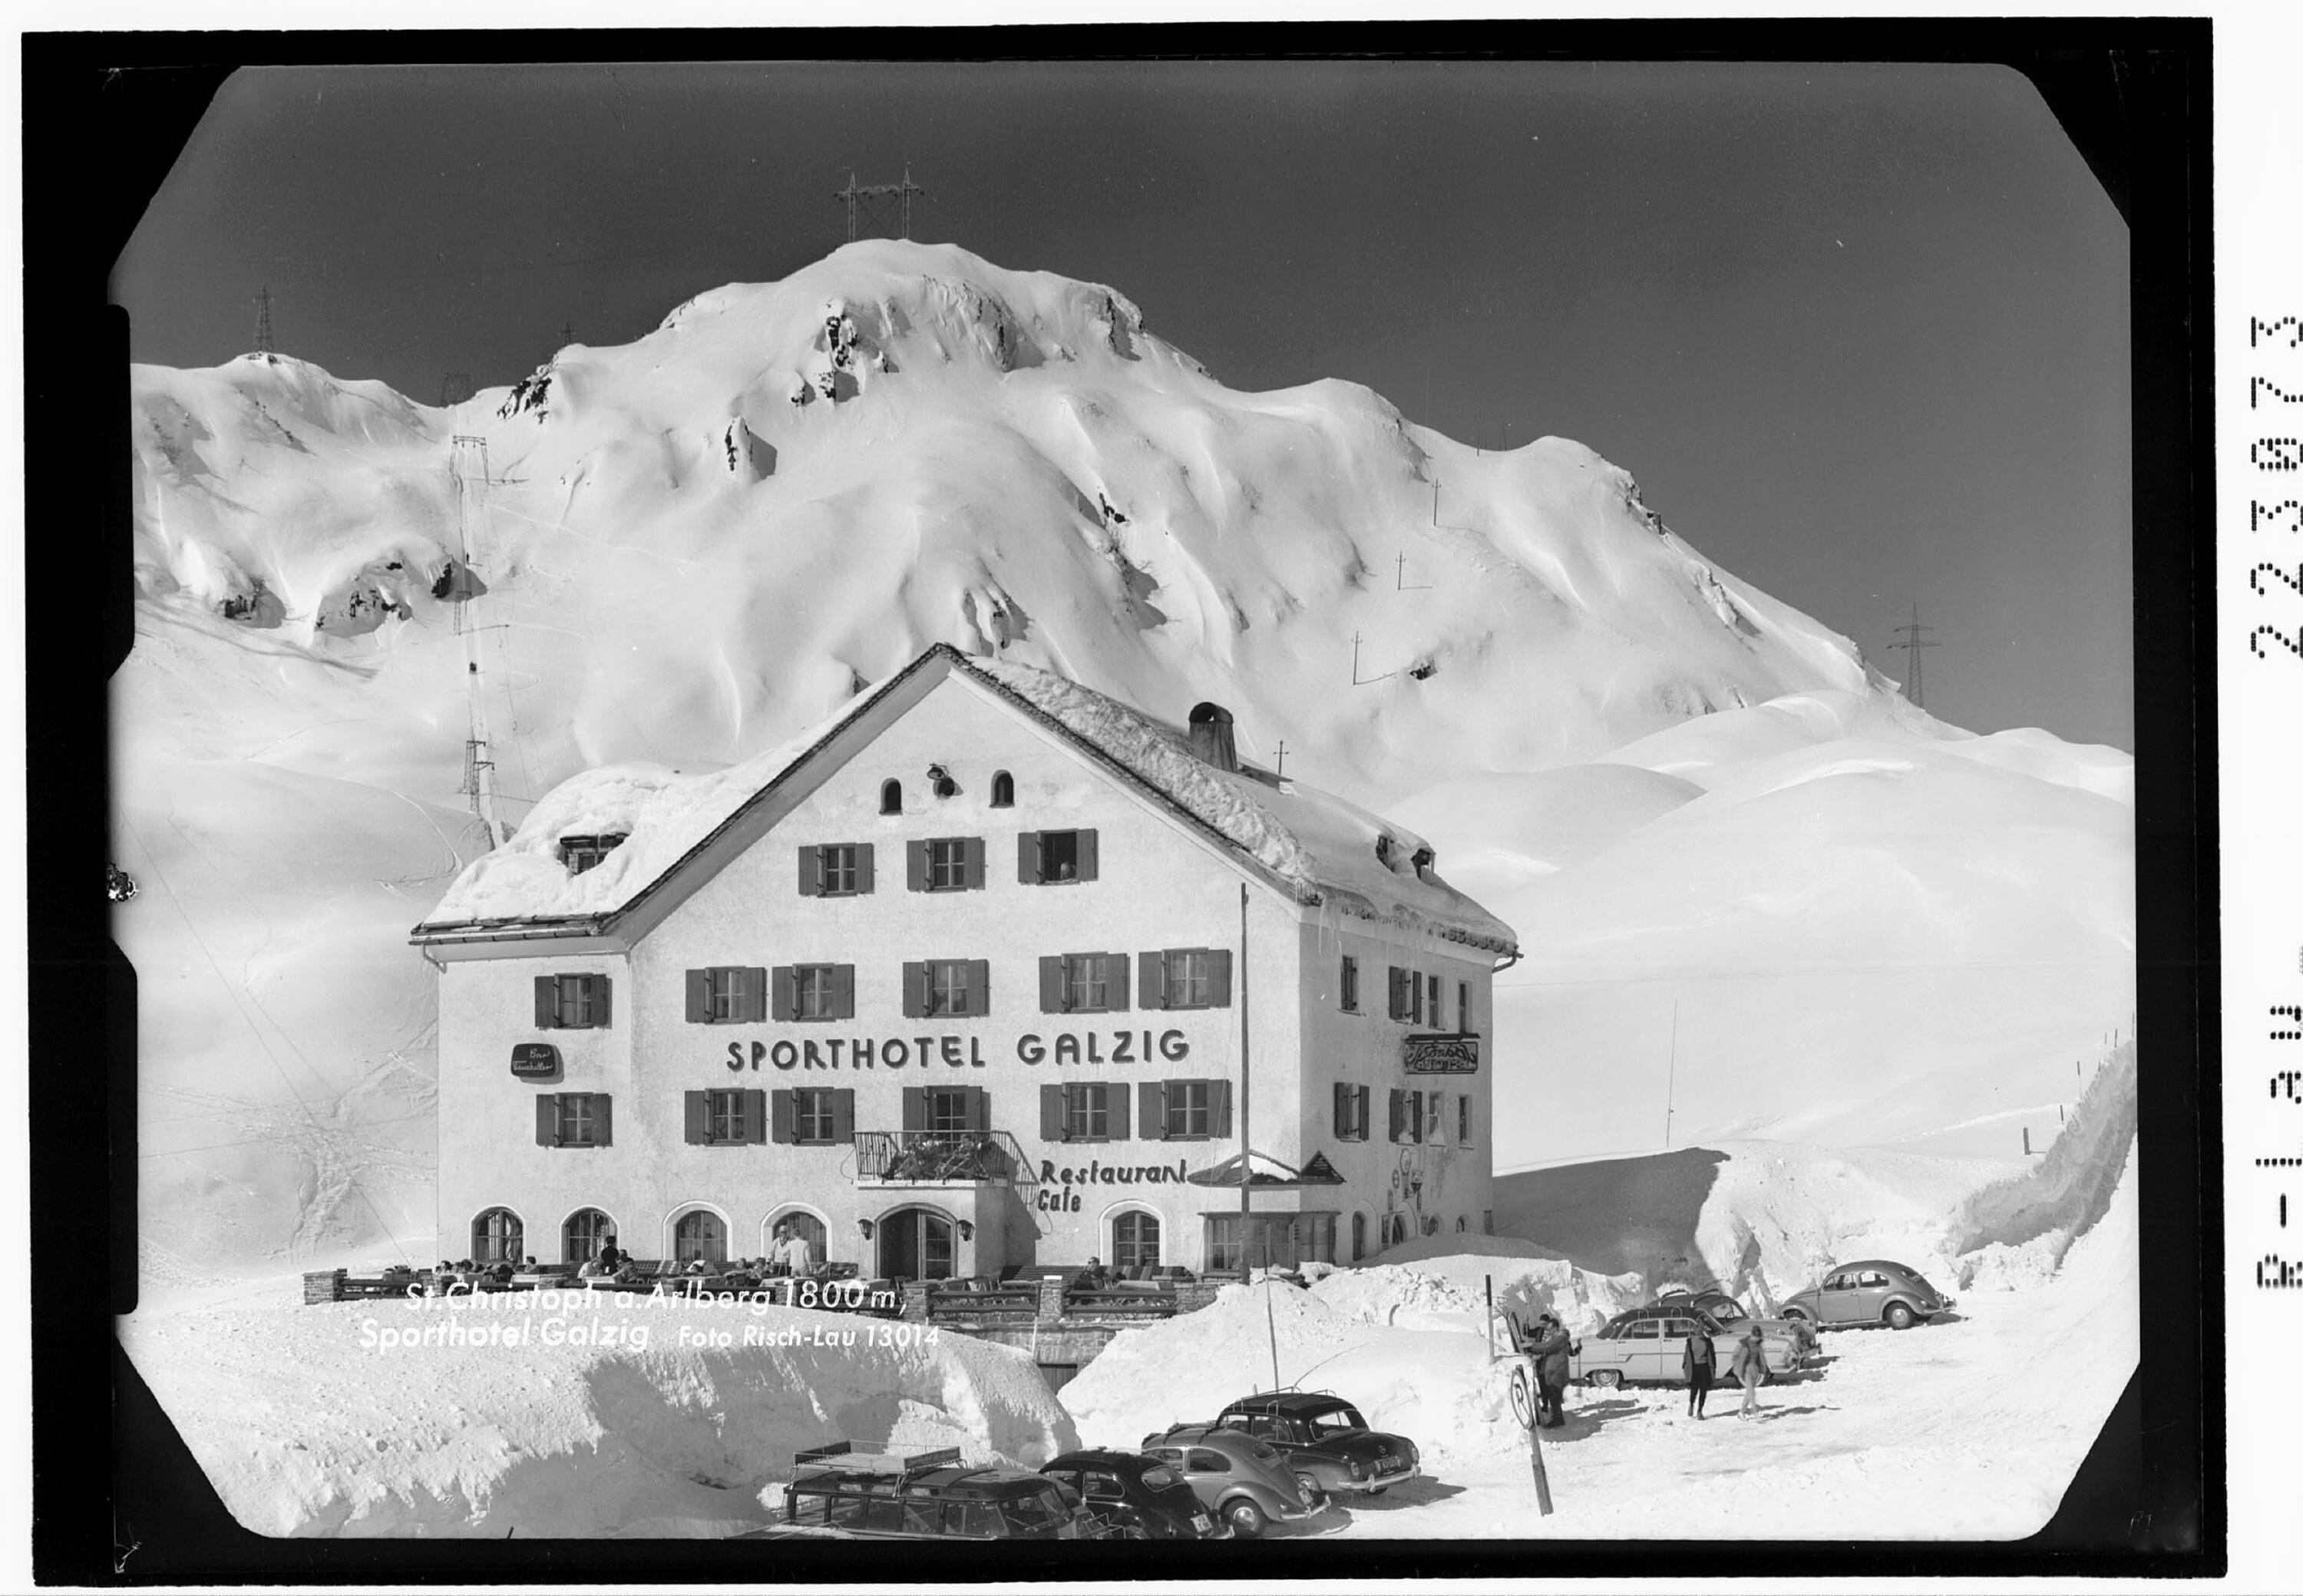 St.Christoph am Arlberg 1800 m / Sporthotel Galzig></div>


    <hr>
    <div class=